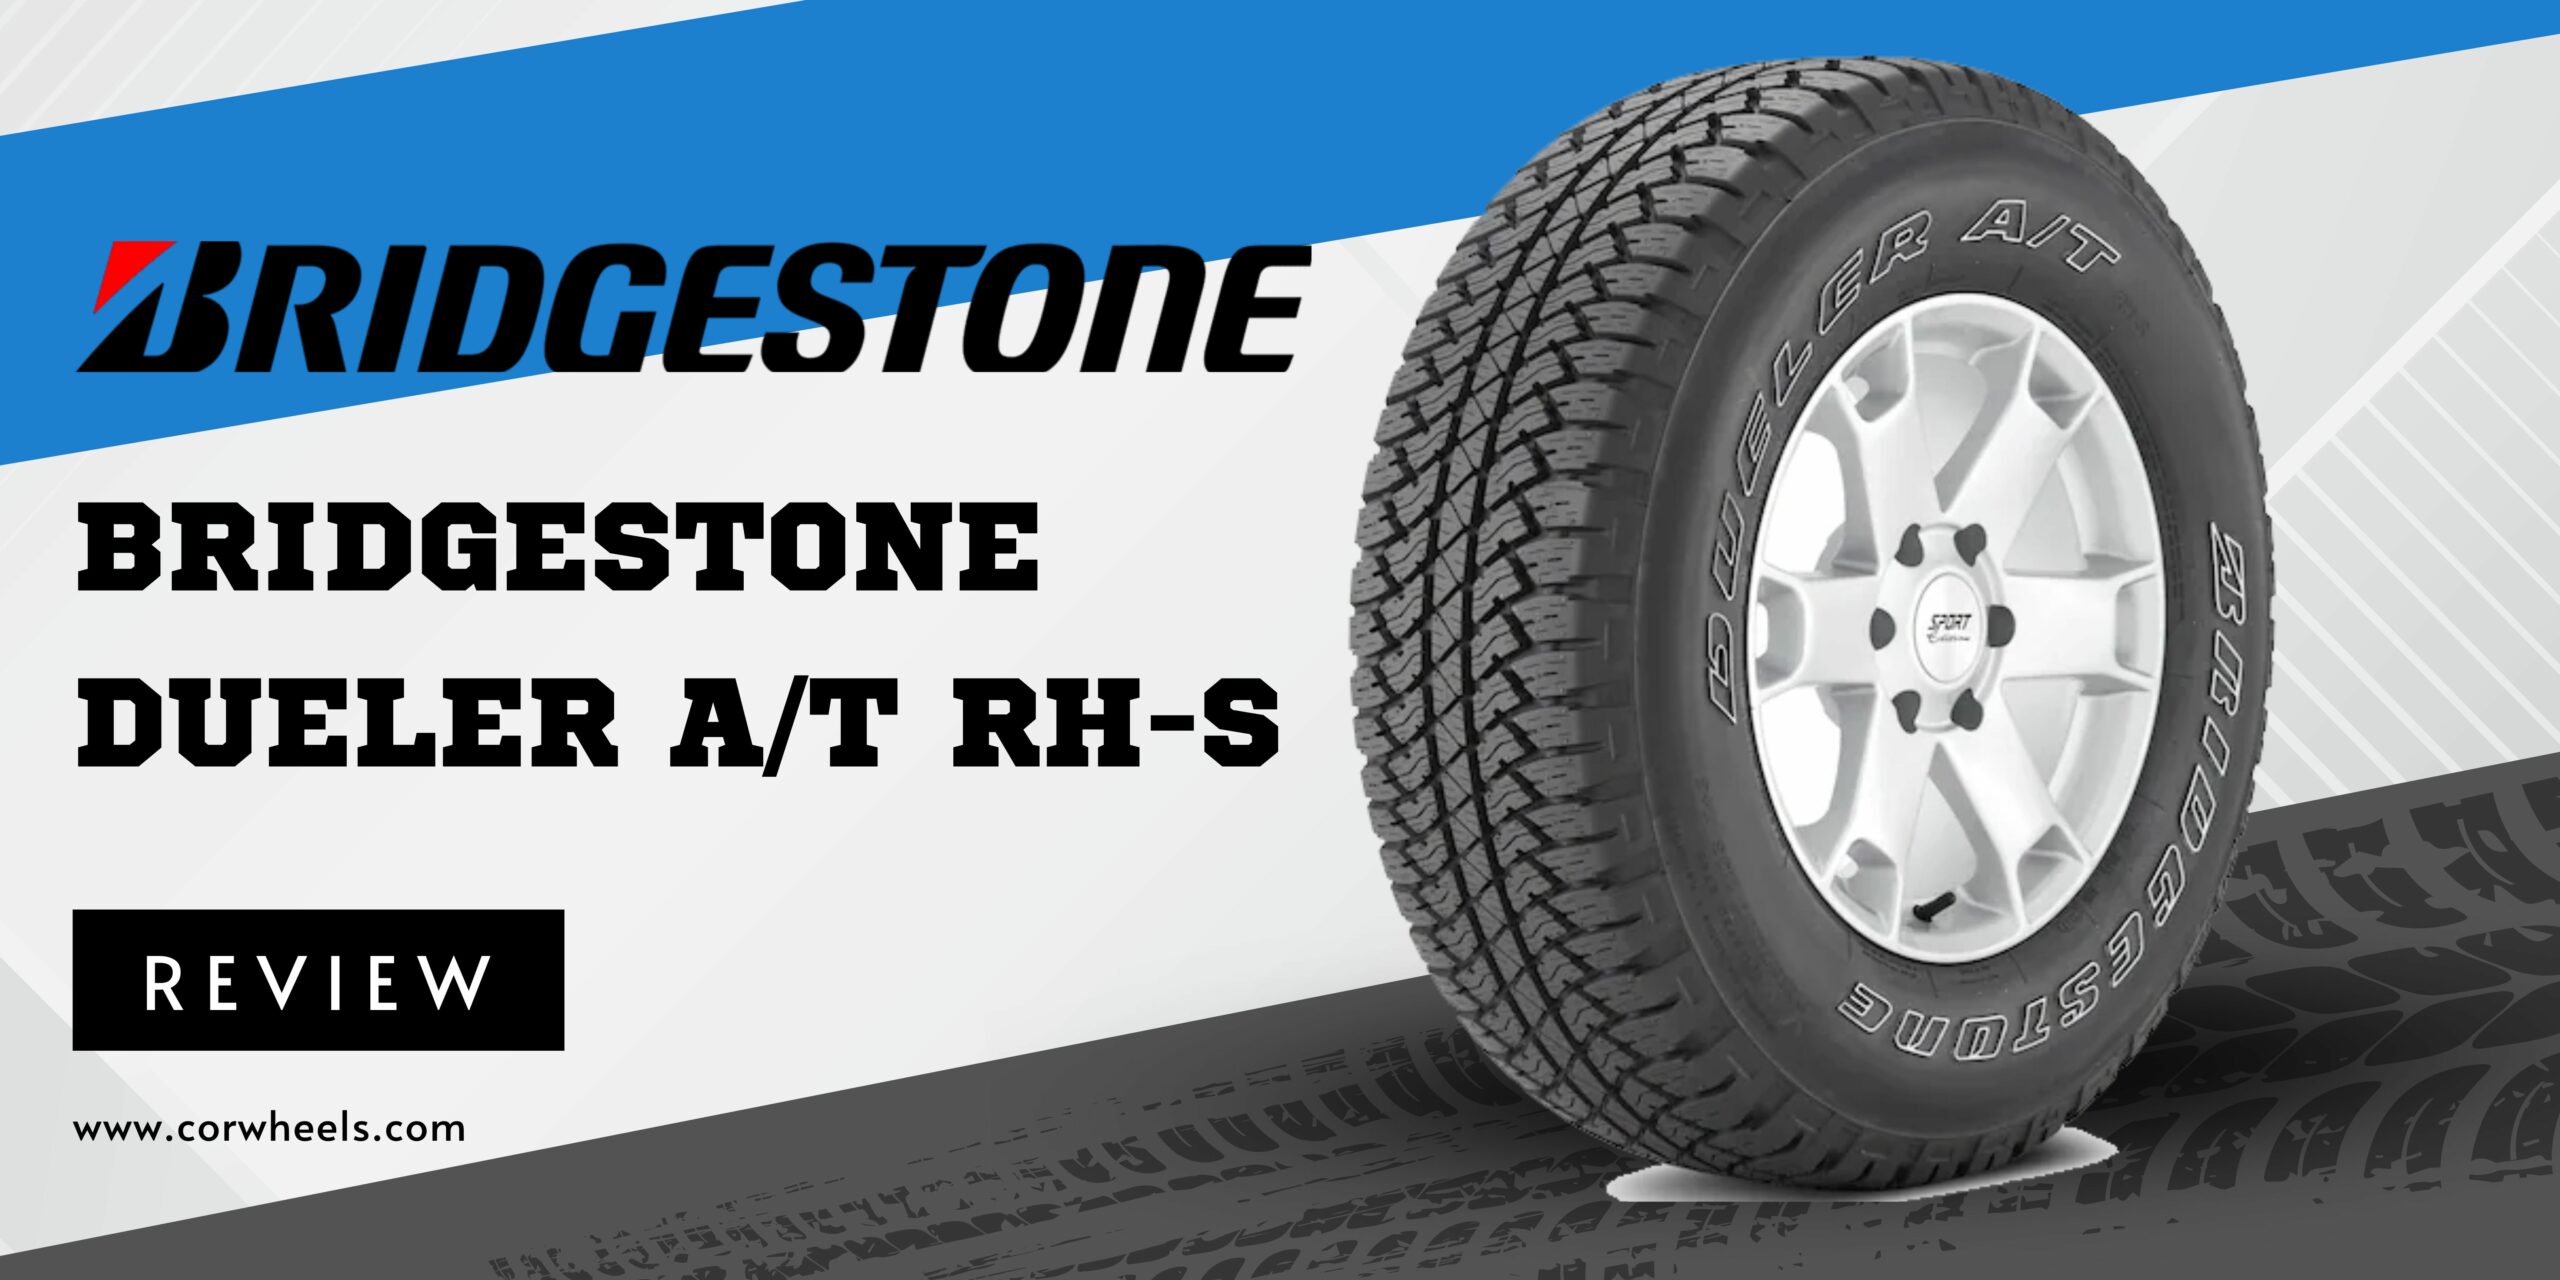 Bridgestone Dueler AT RH-S review